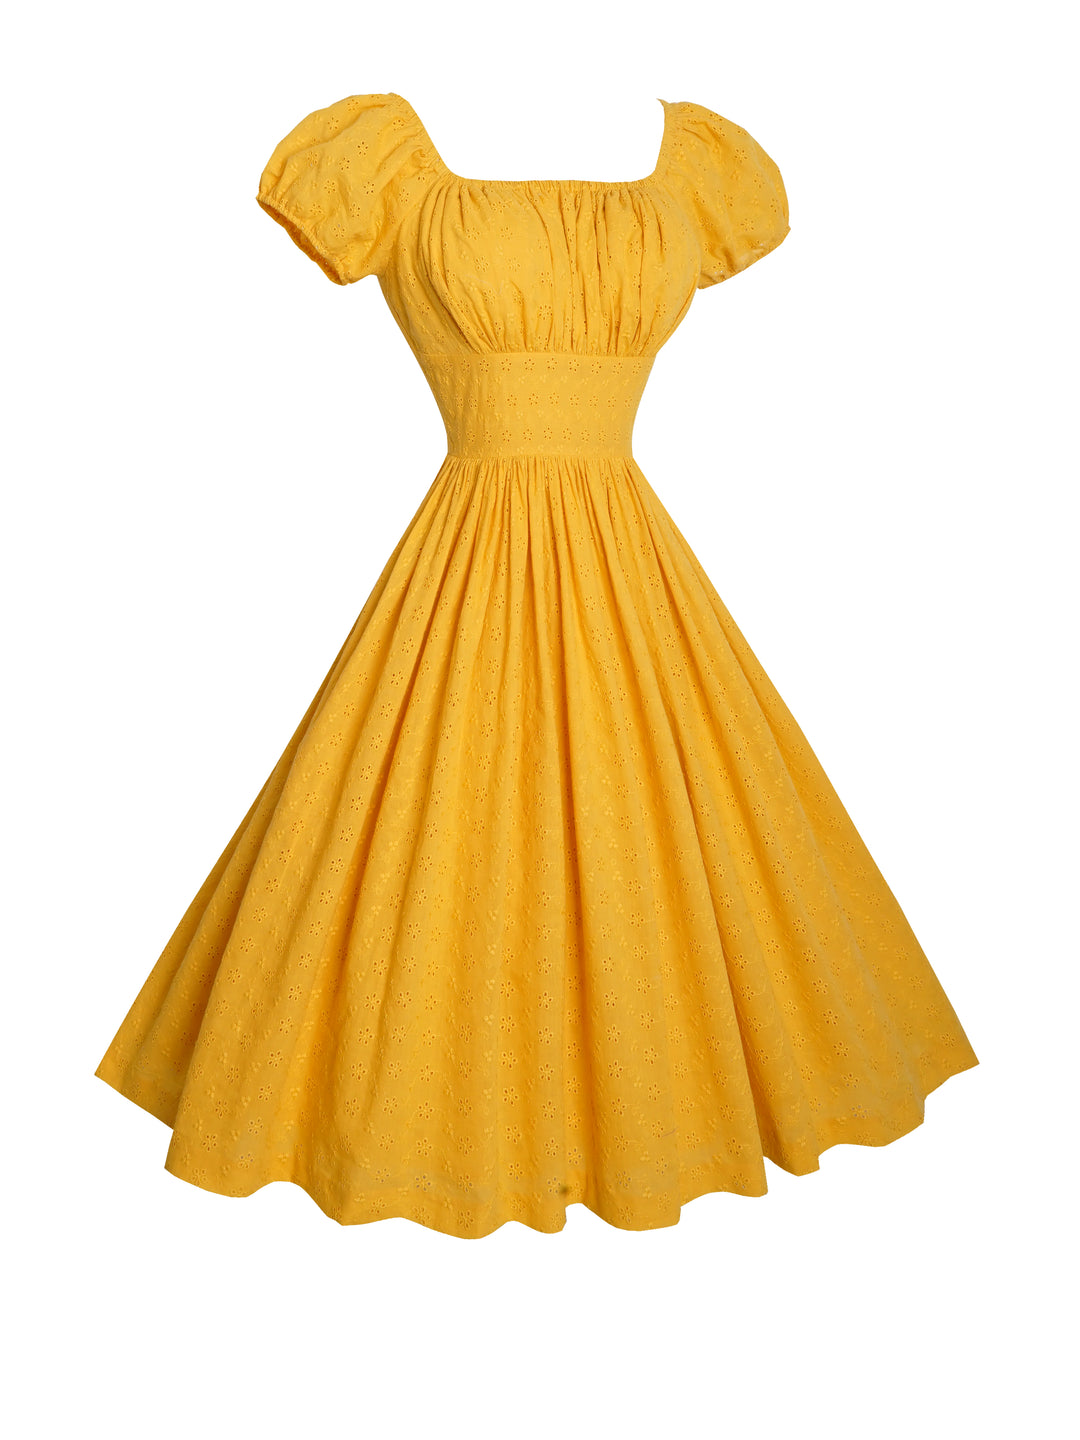 MTO - Loretta Dress in Mustard "Forget Me Not"